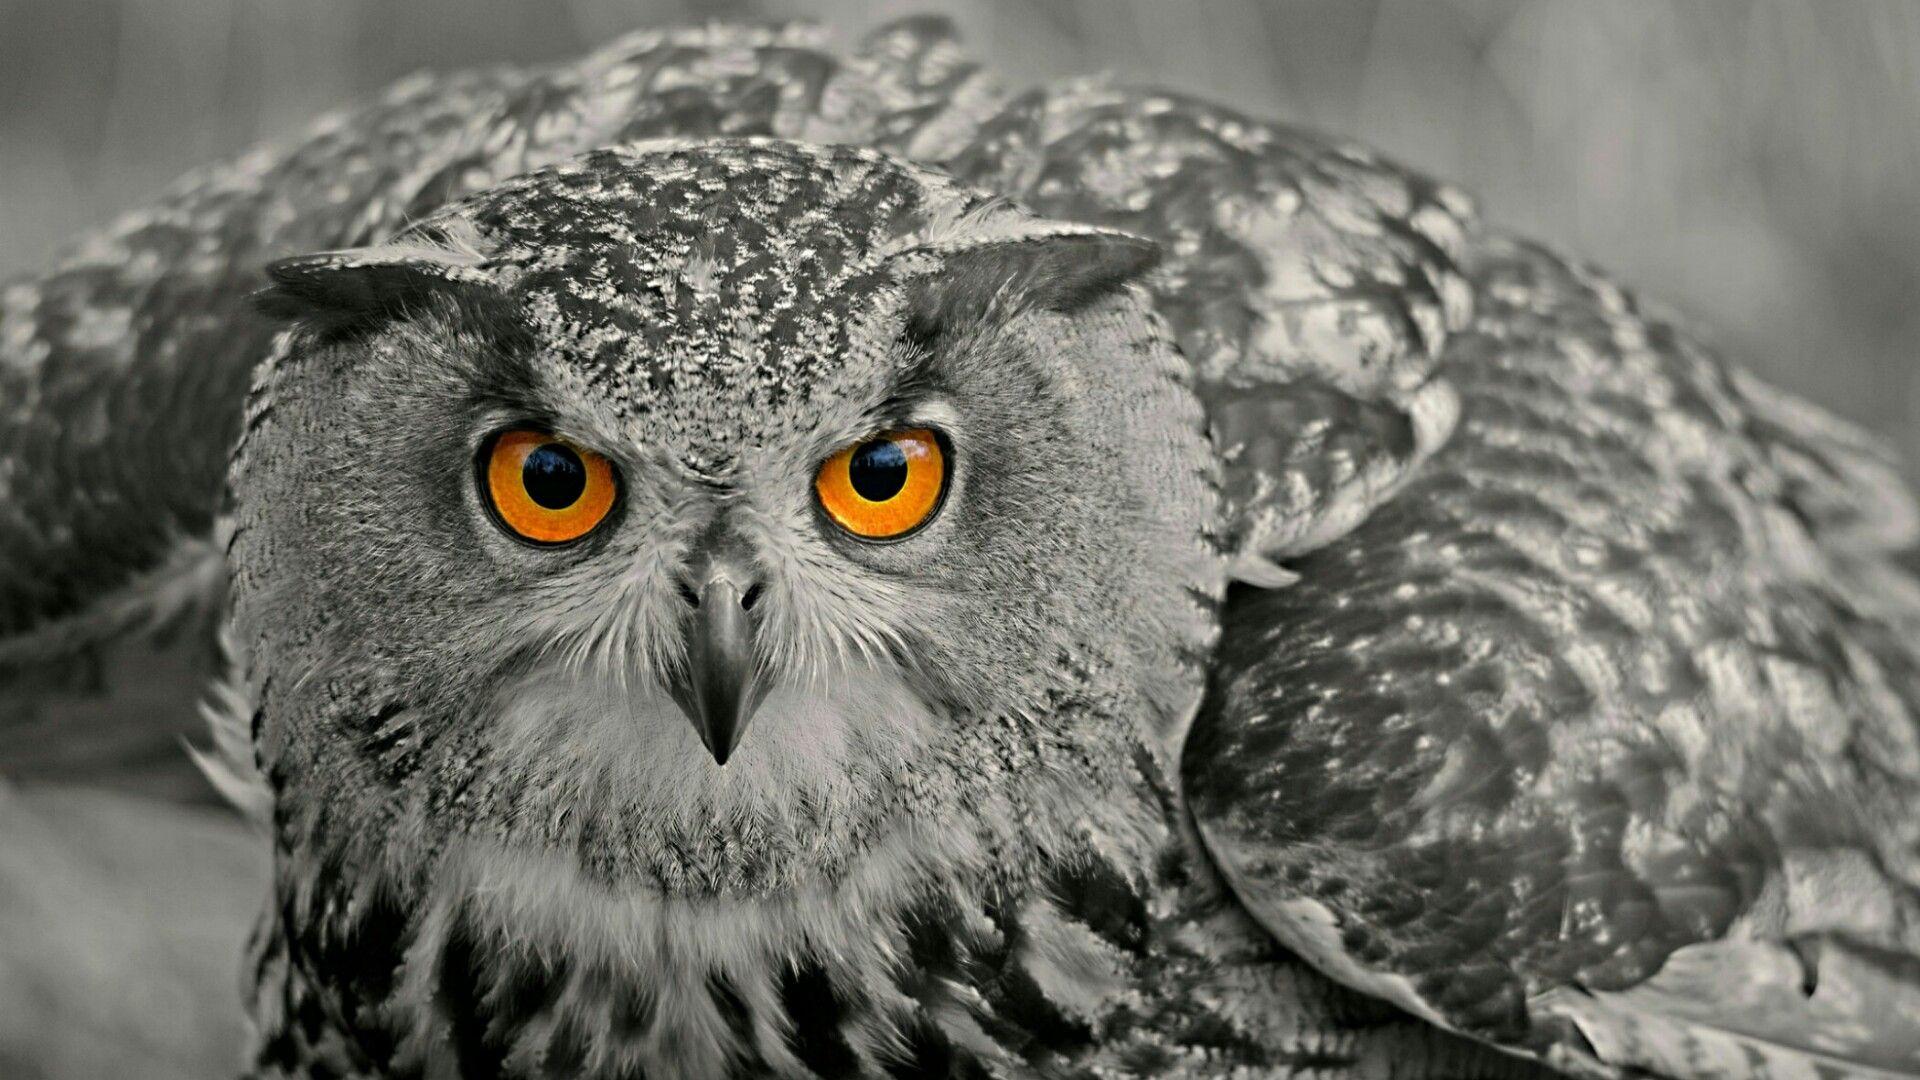 Monochrome Owl Wallpaper. Wallpaper Studio 10. Tens of thousands